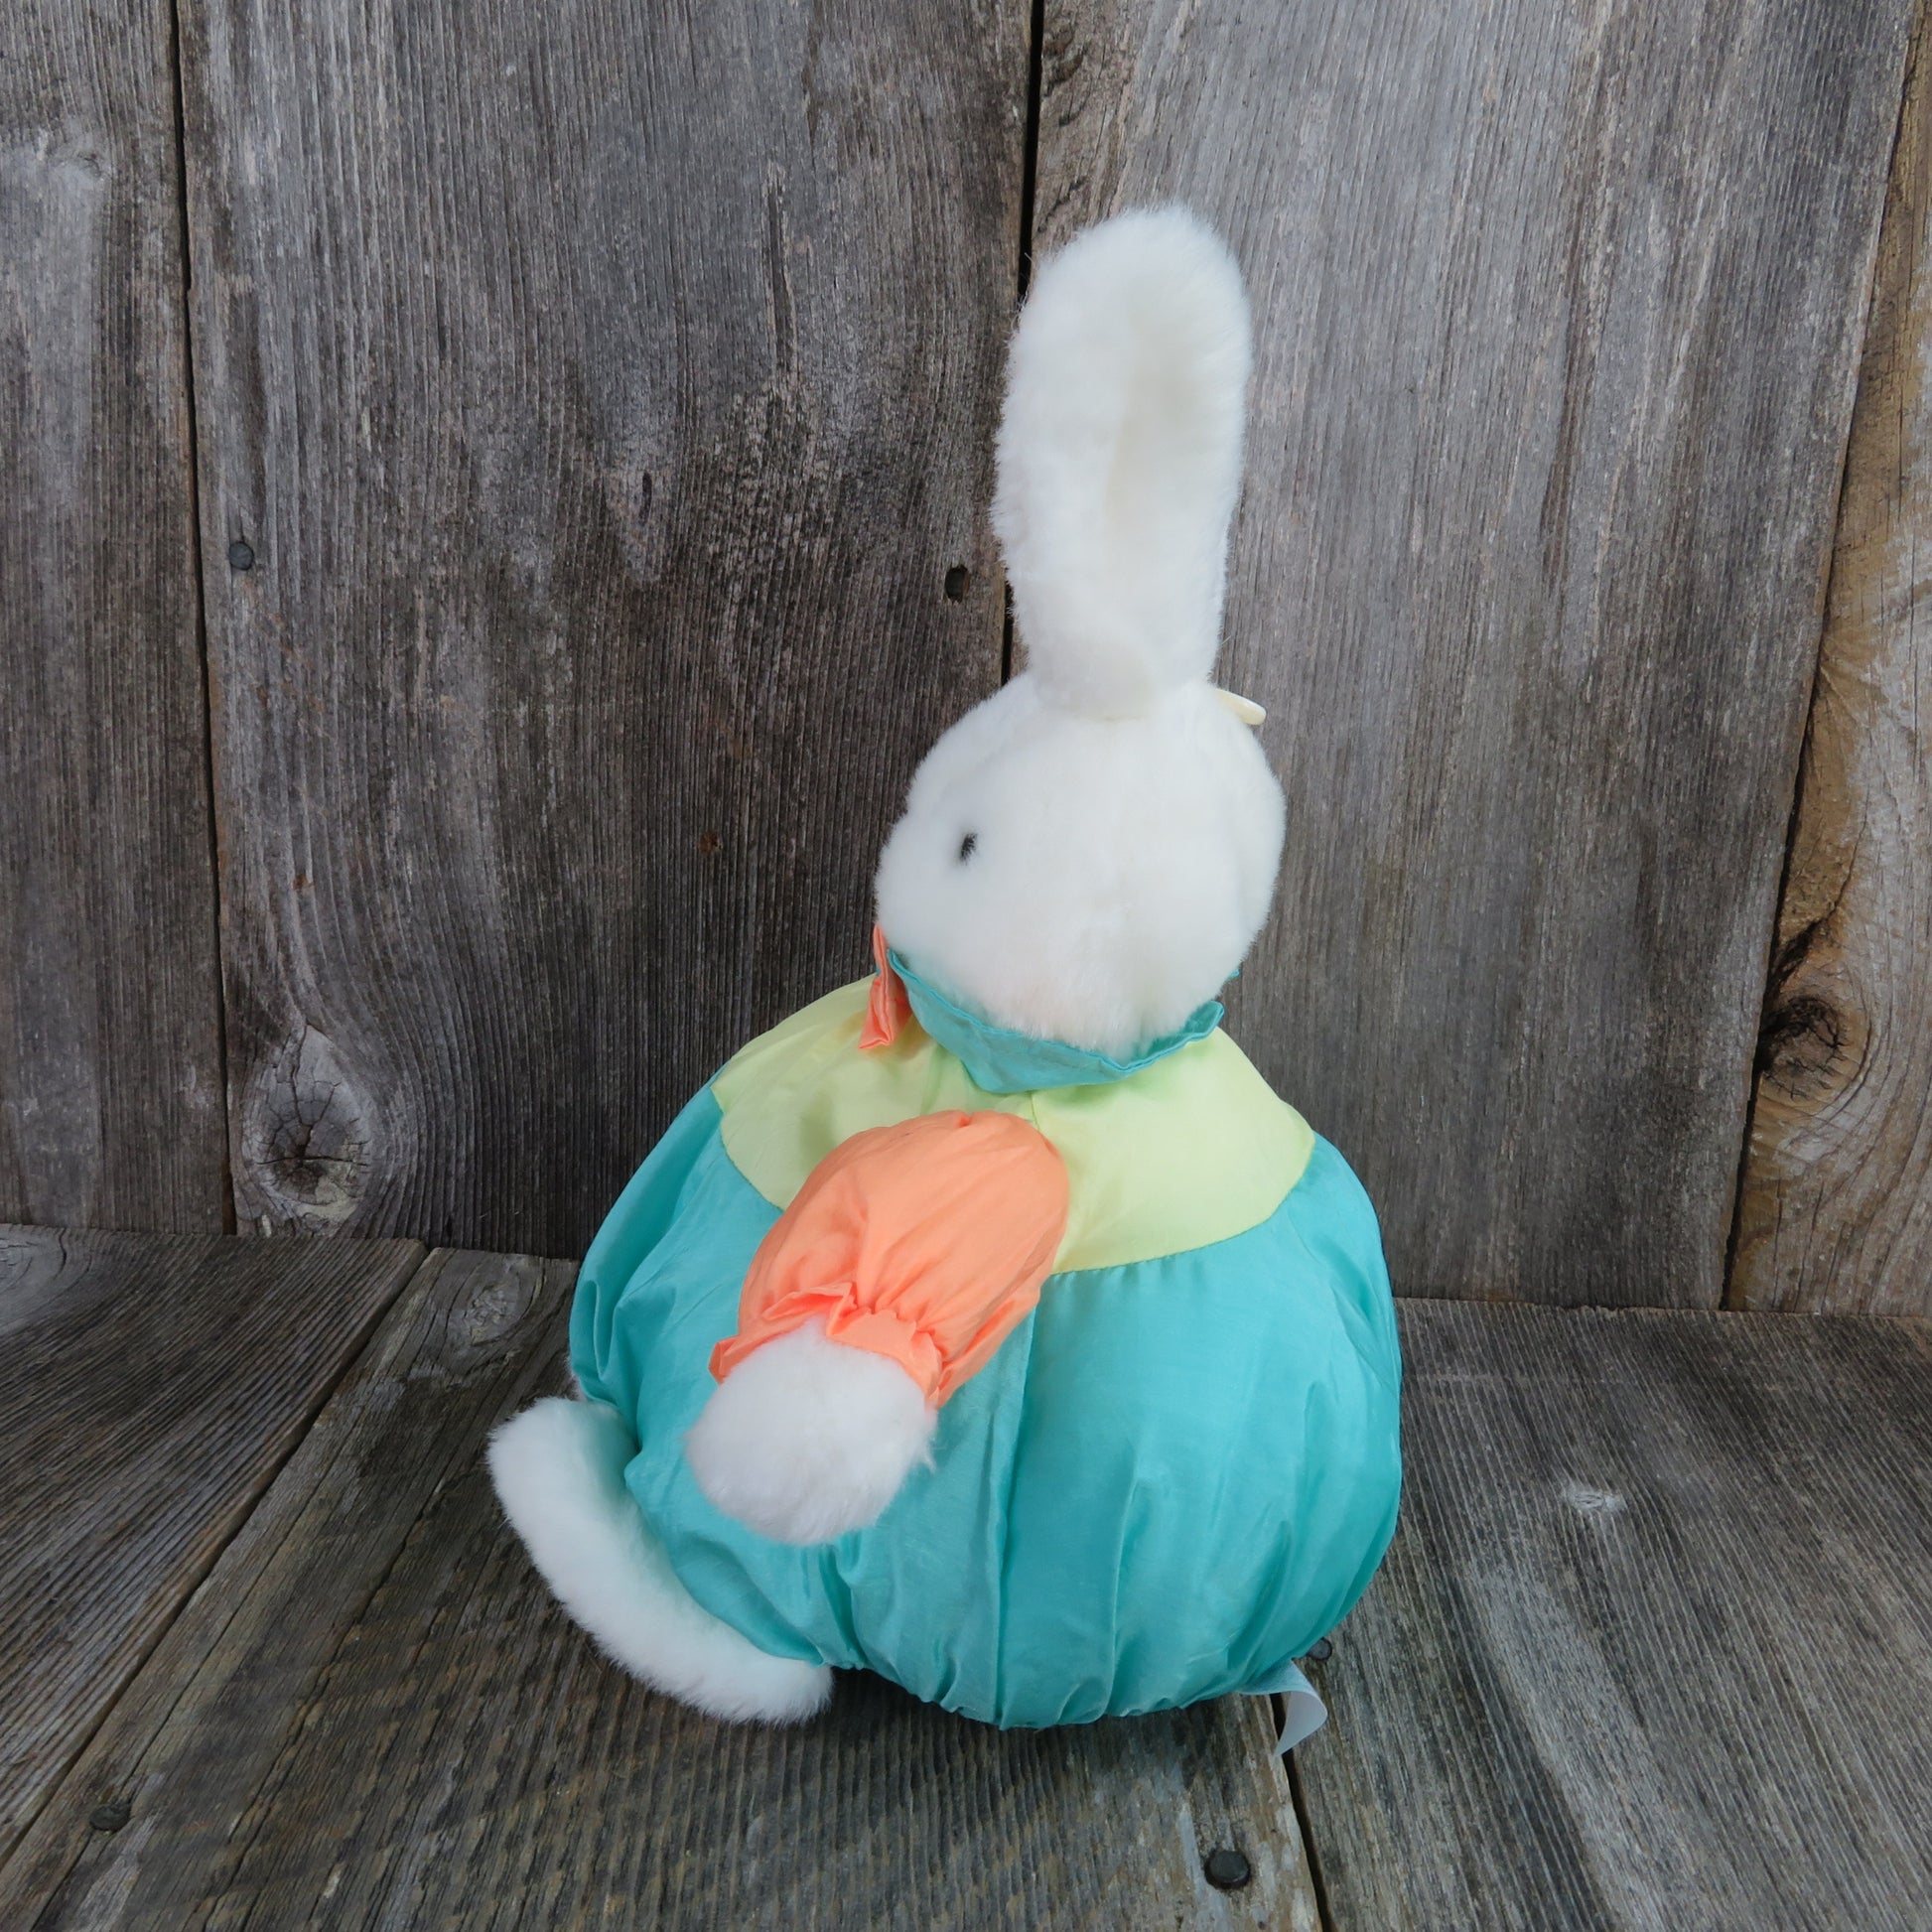 Vintage Bunny Rabbit Plush Dan Dee Pastel Green Peach Yellow Easter Stuffed Animal Puffy - At Grandma's Table